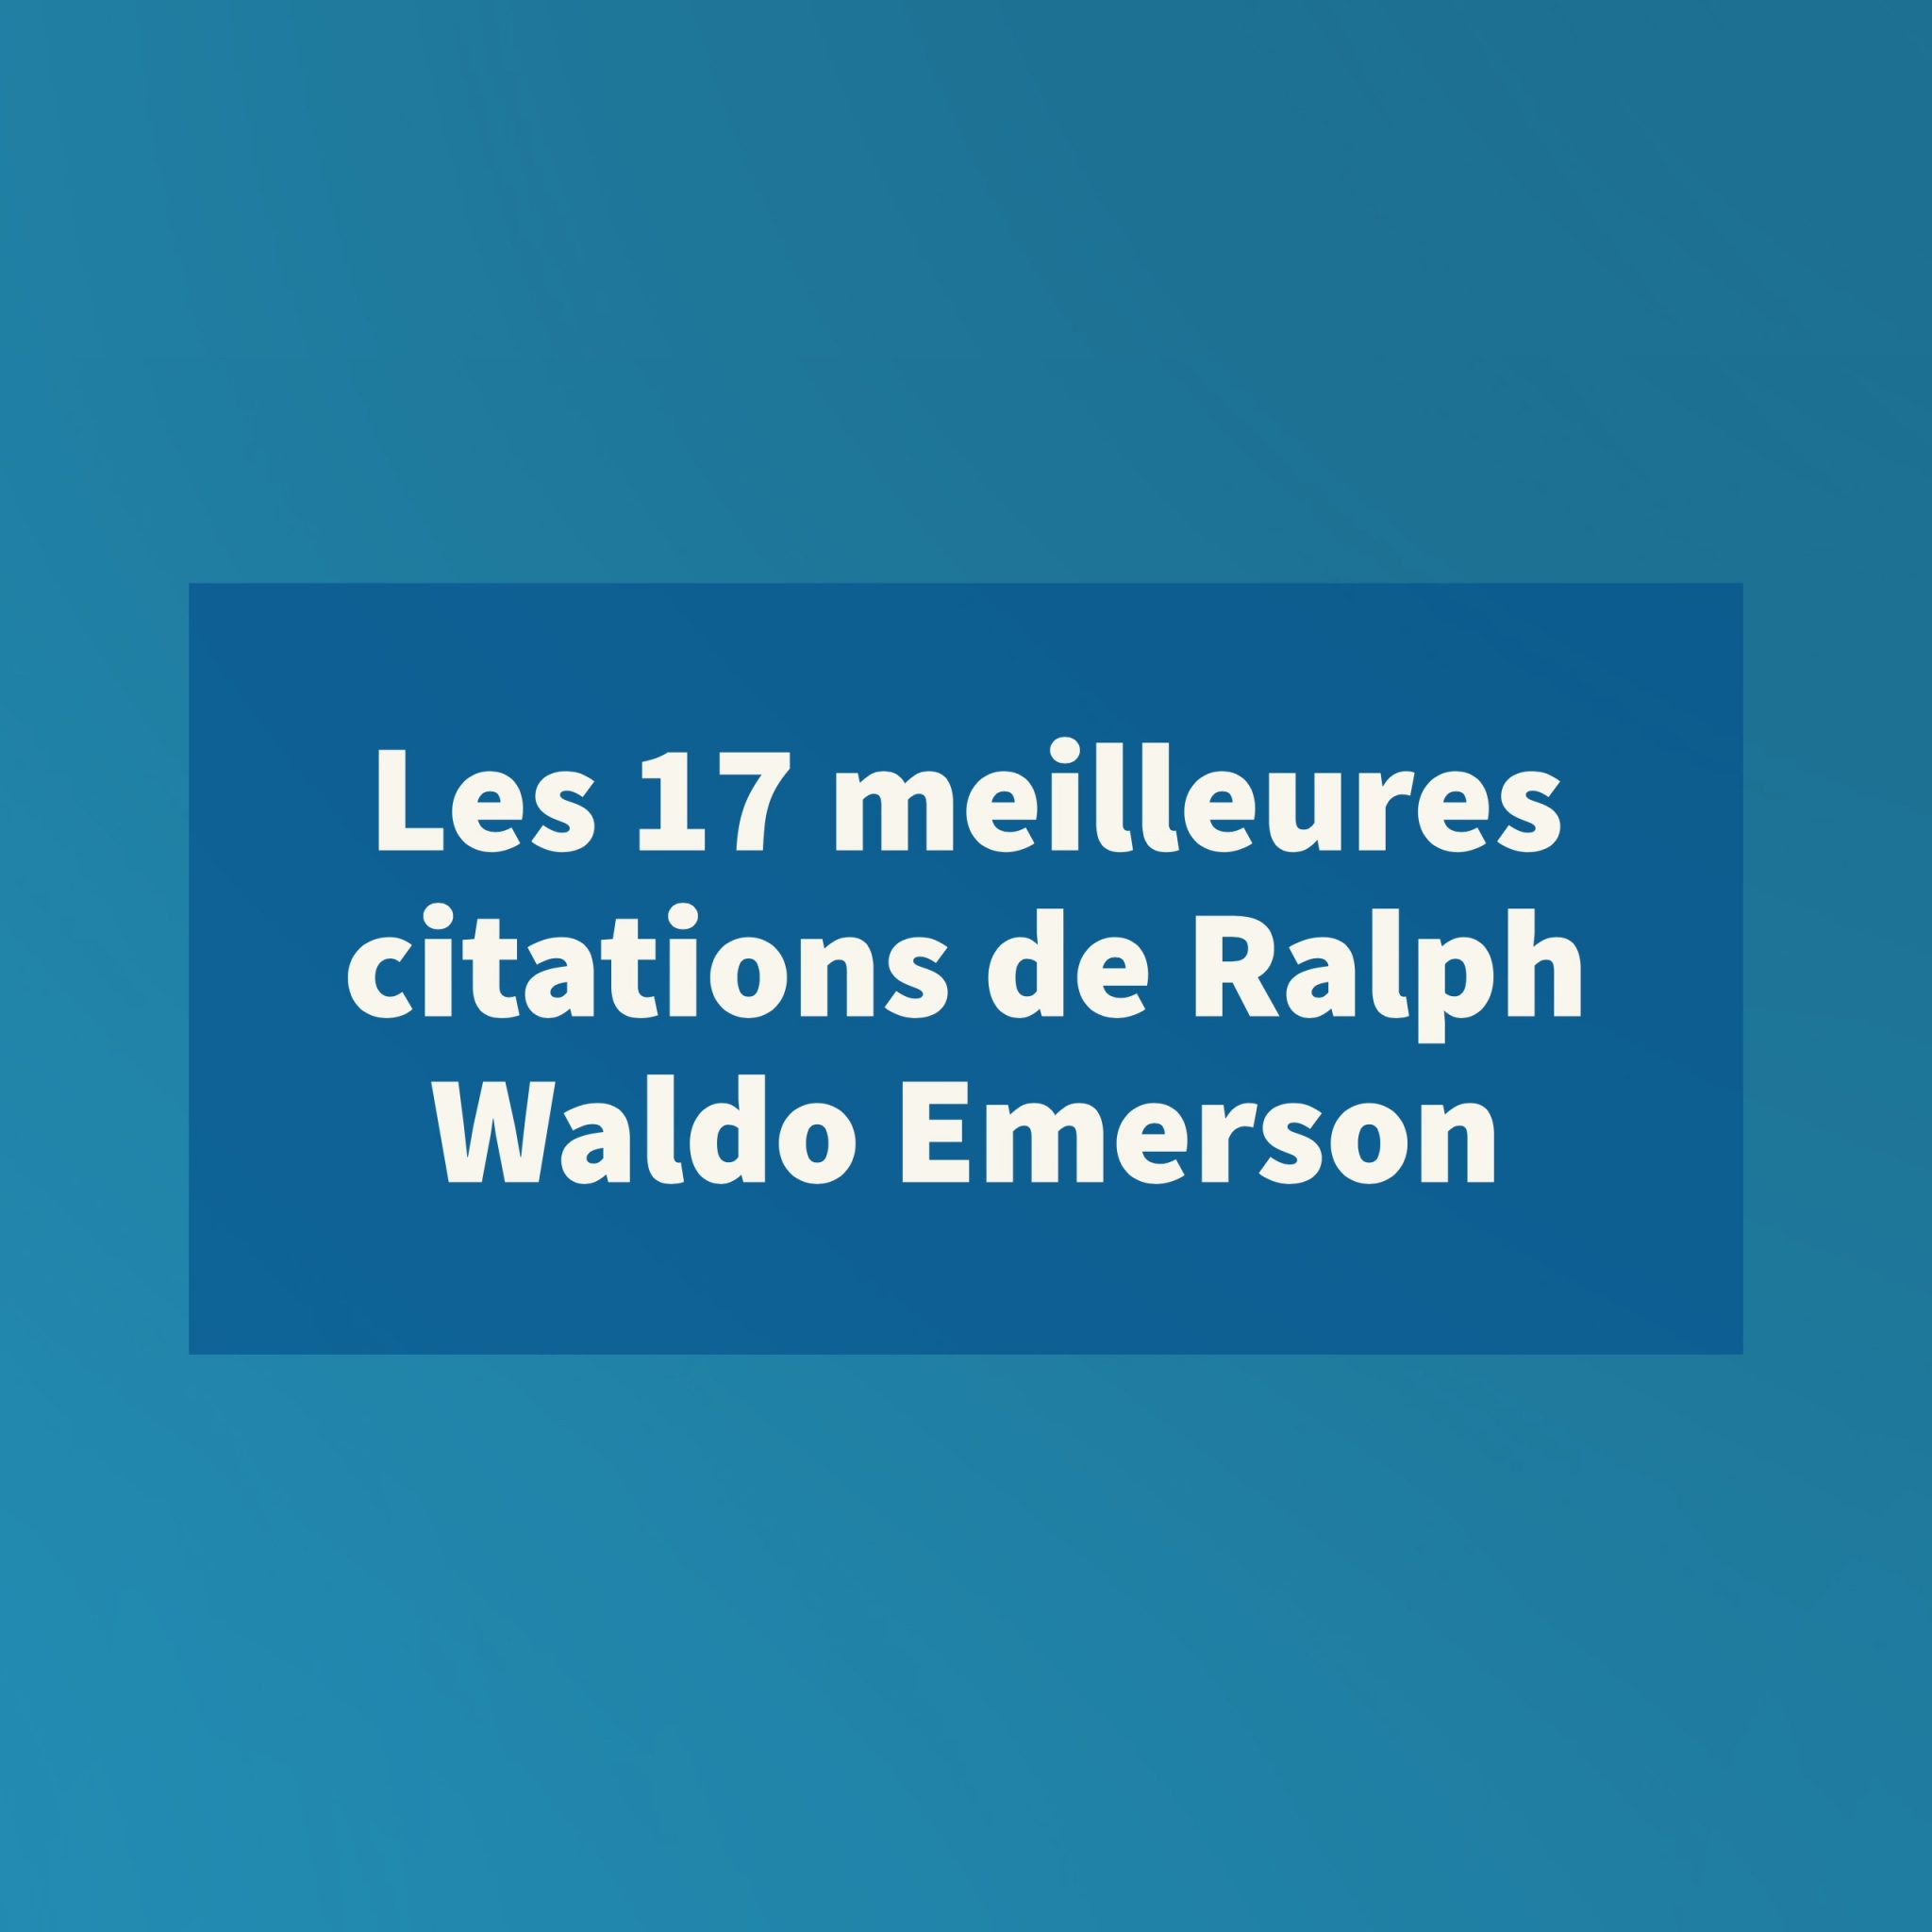 Les 17 meilleures citations de Ralph Waldo Emerson